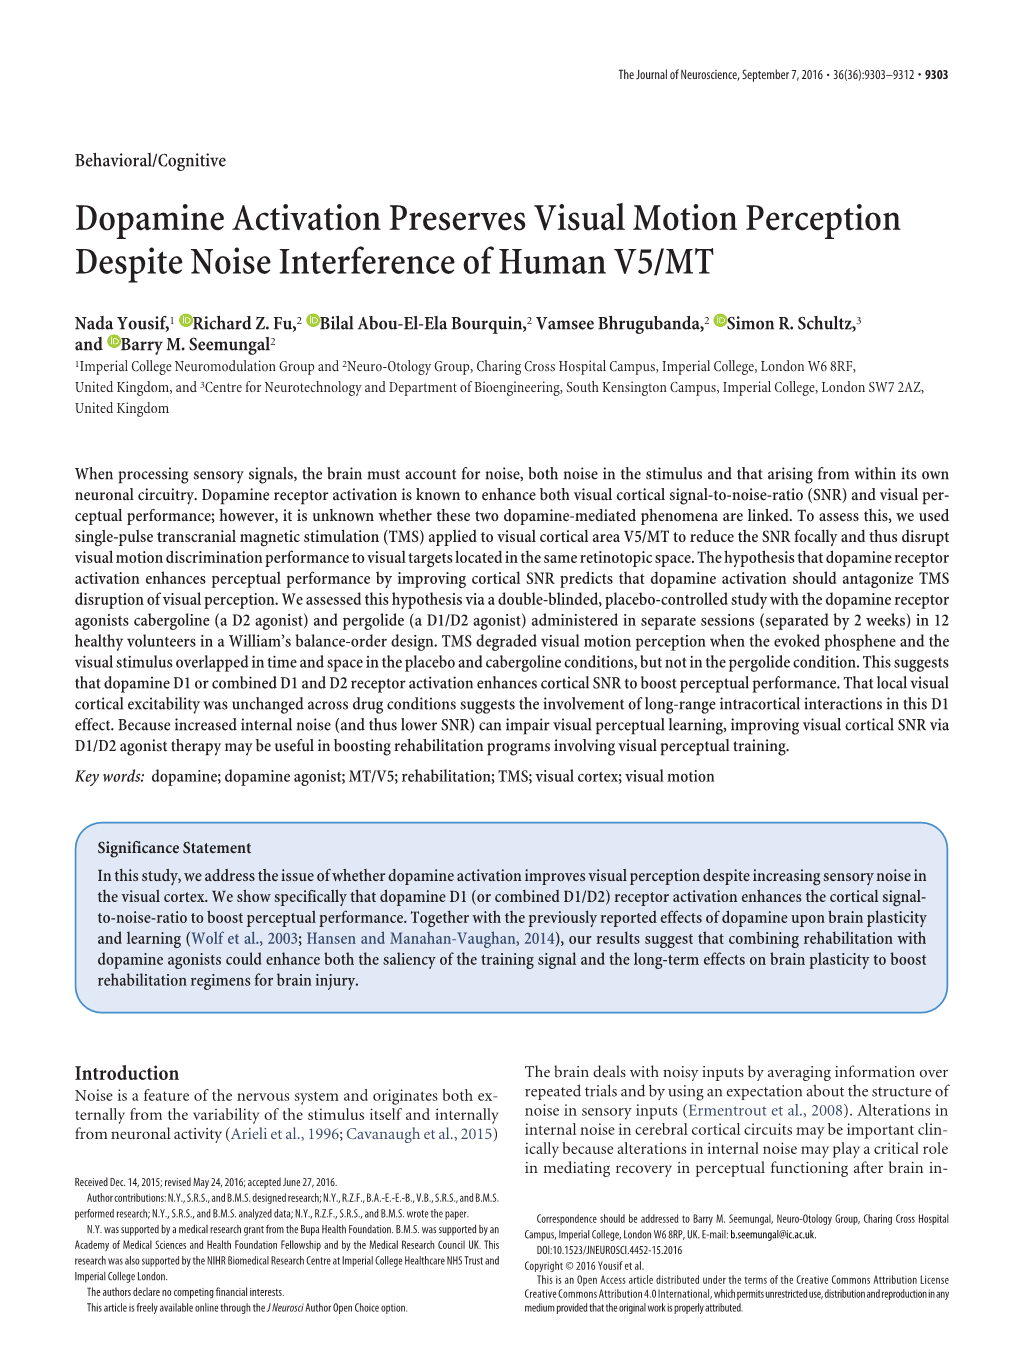 Dopamine Activation Preserves Visual Motion Perception Despite Noise Interference of Human V5/MT